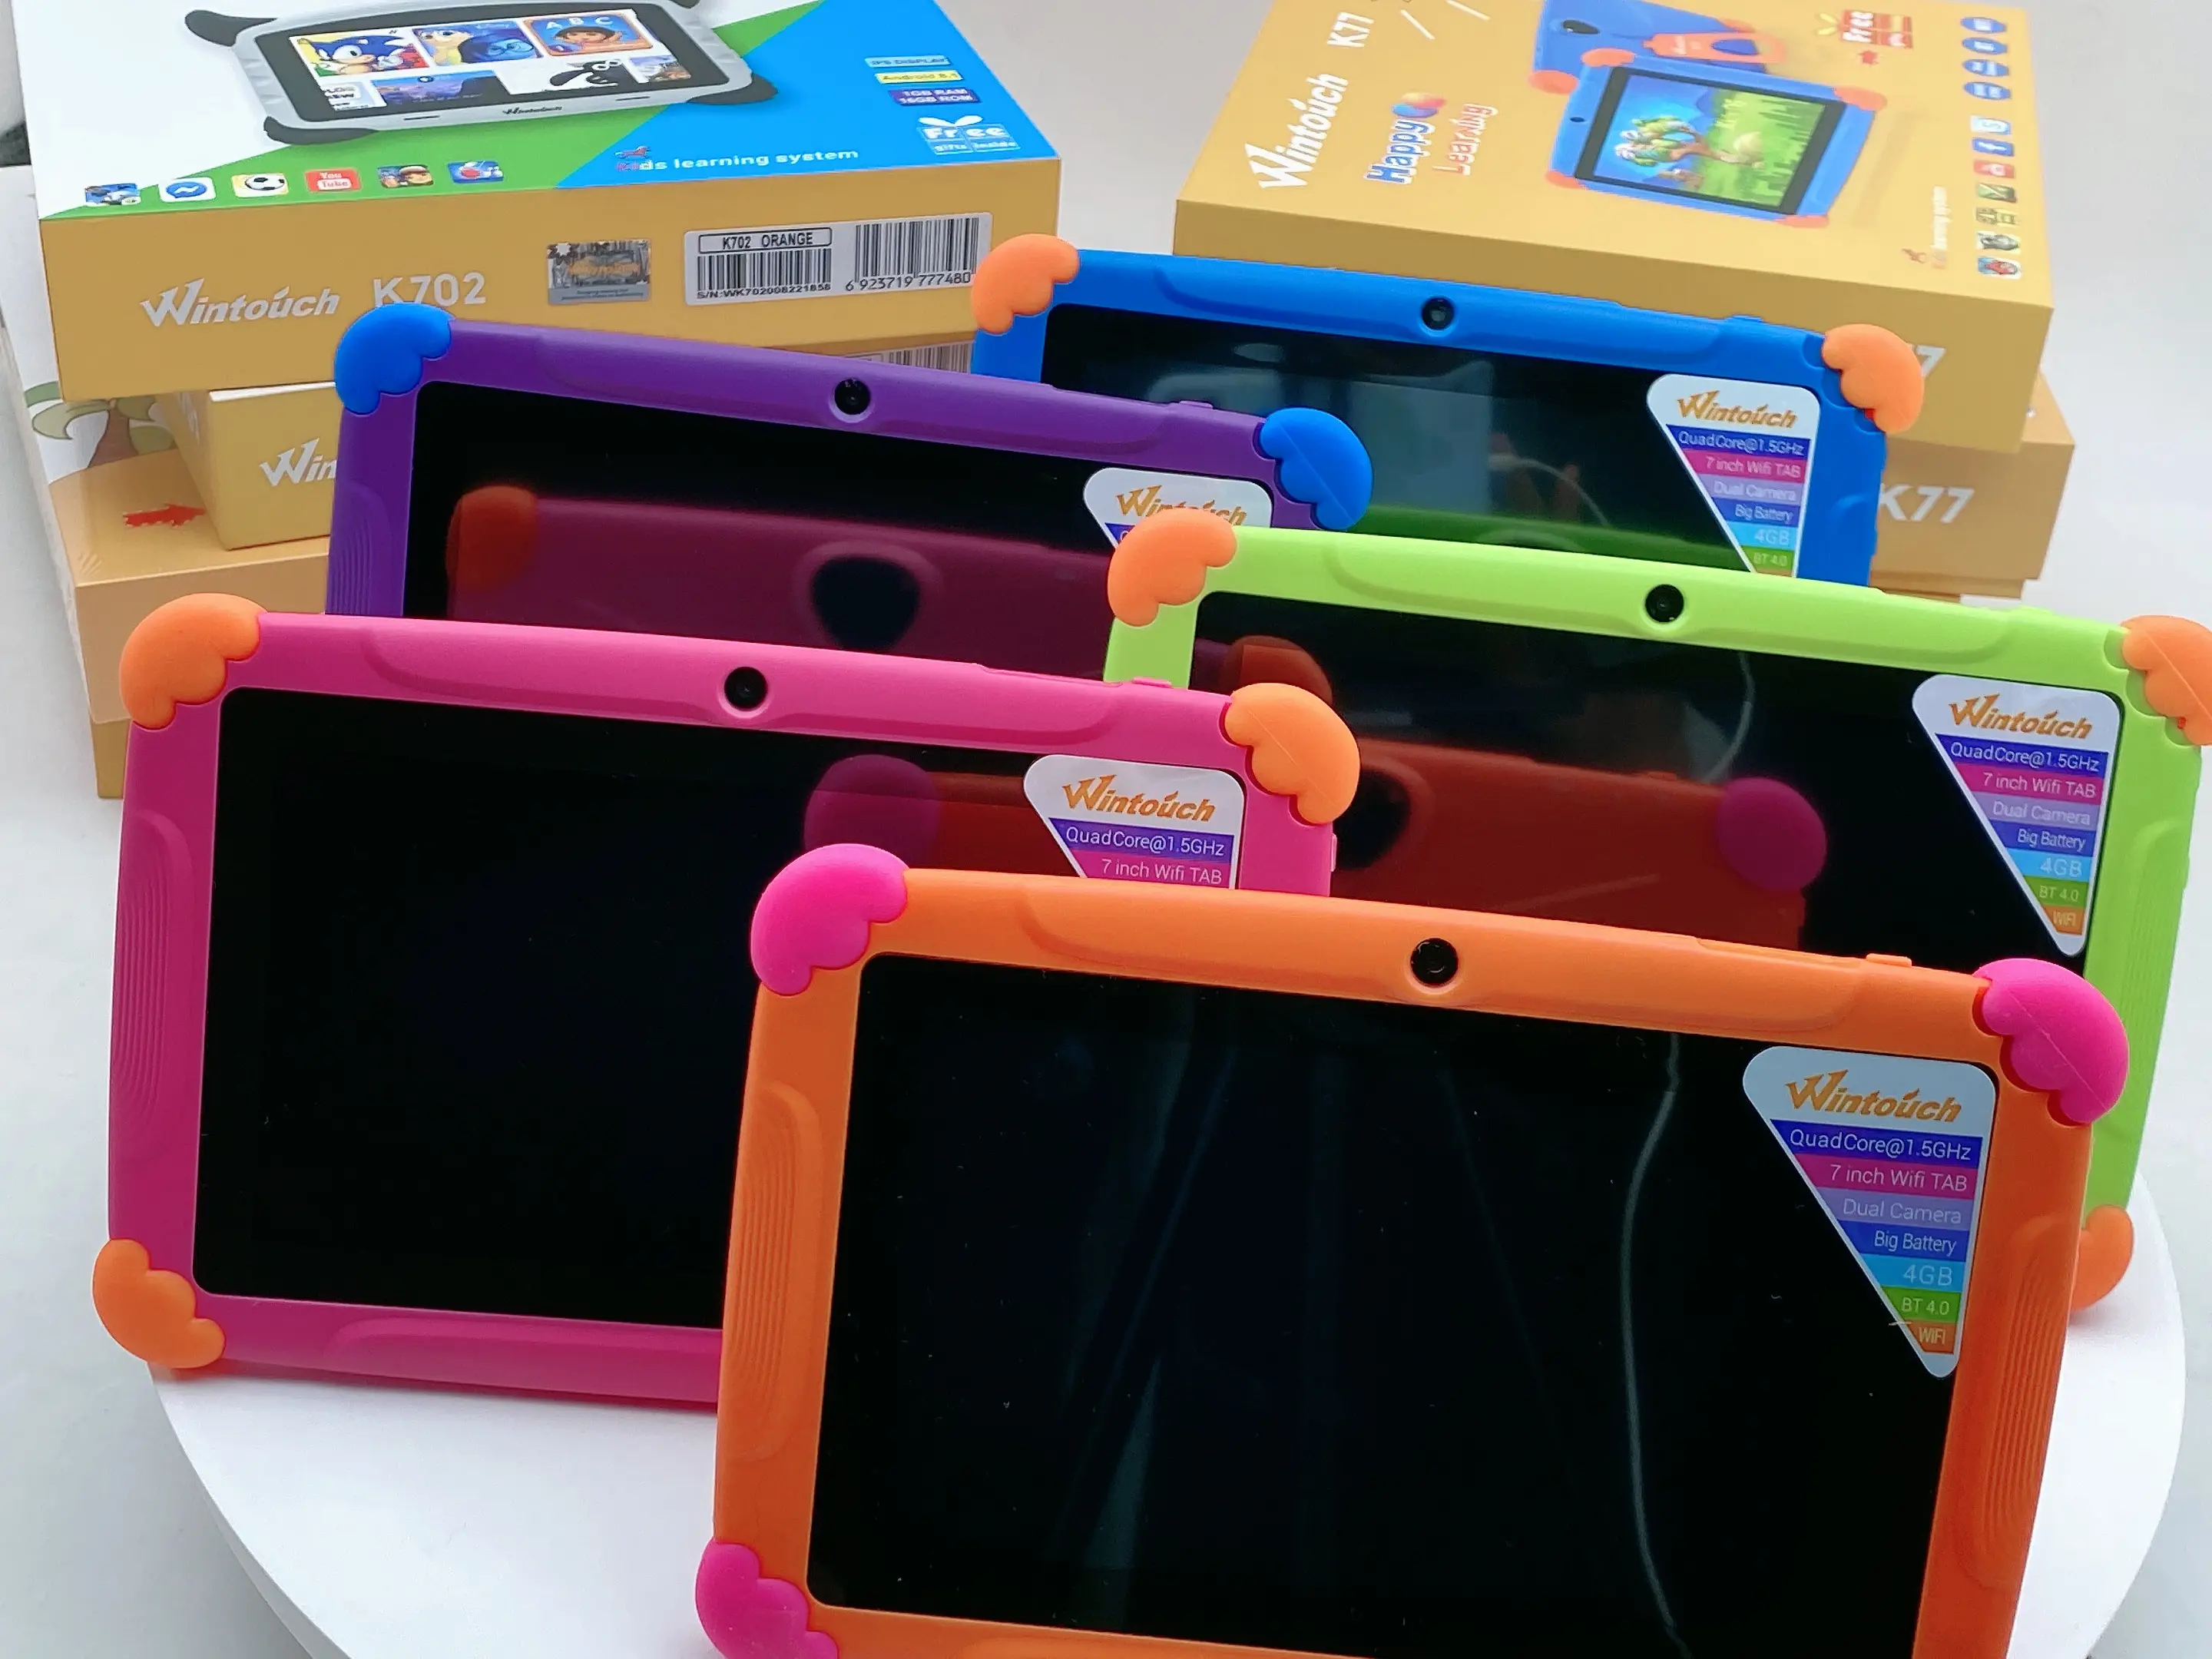 Tableta de aprendizaje para niños, Tablet educativa de 7 pulgadas, 8GB, Android